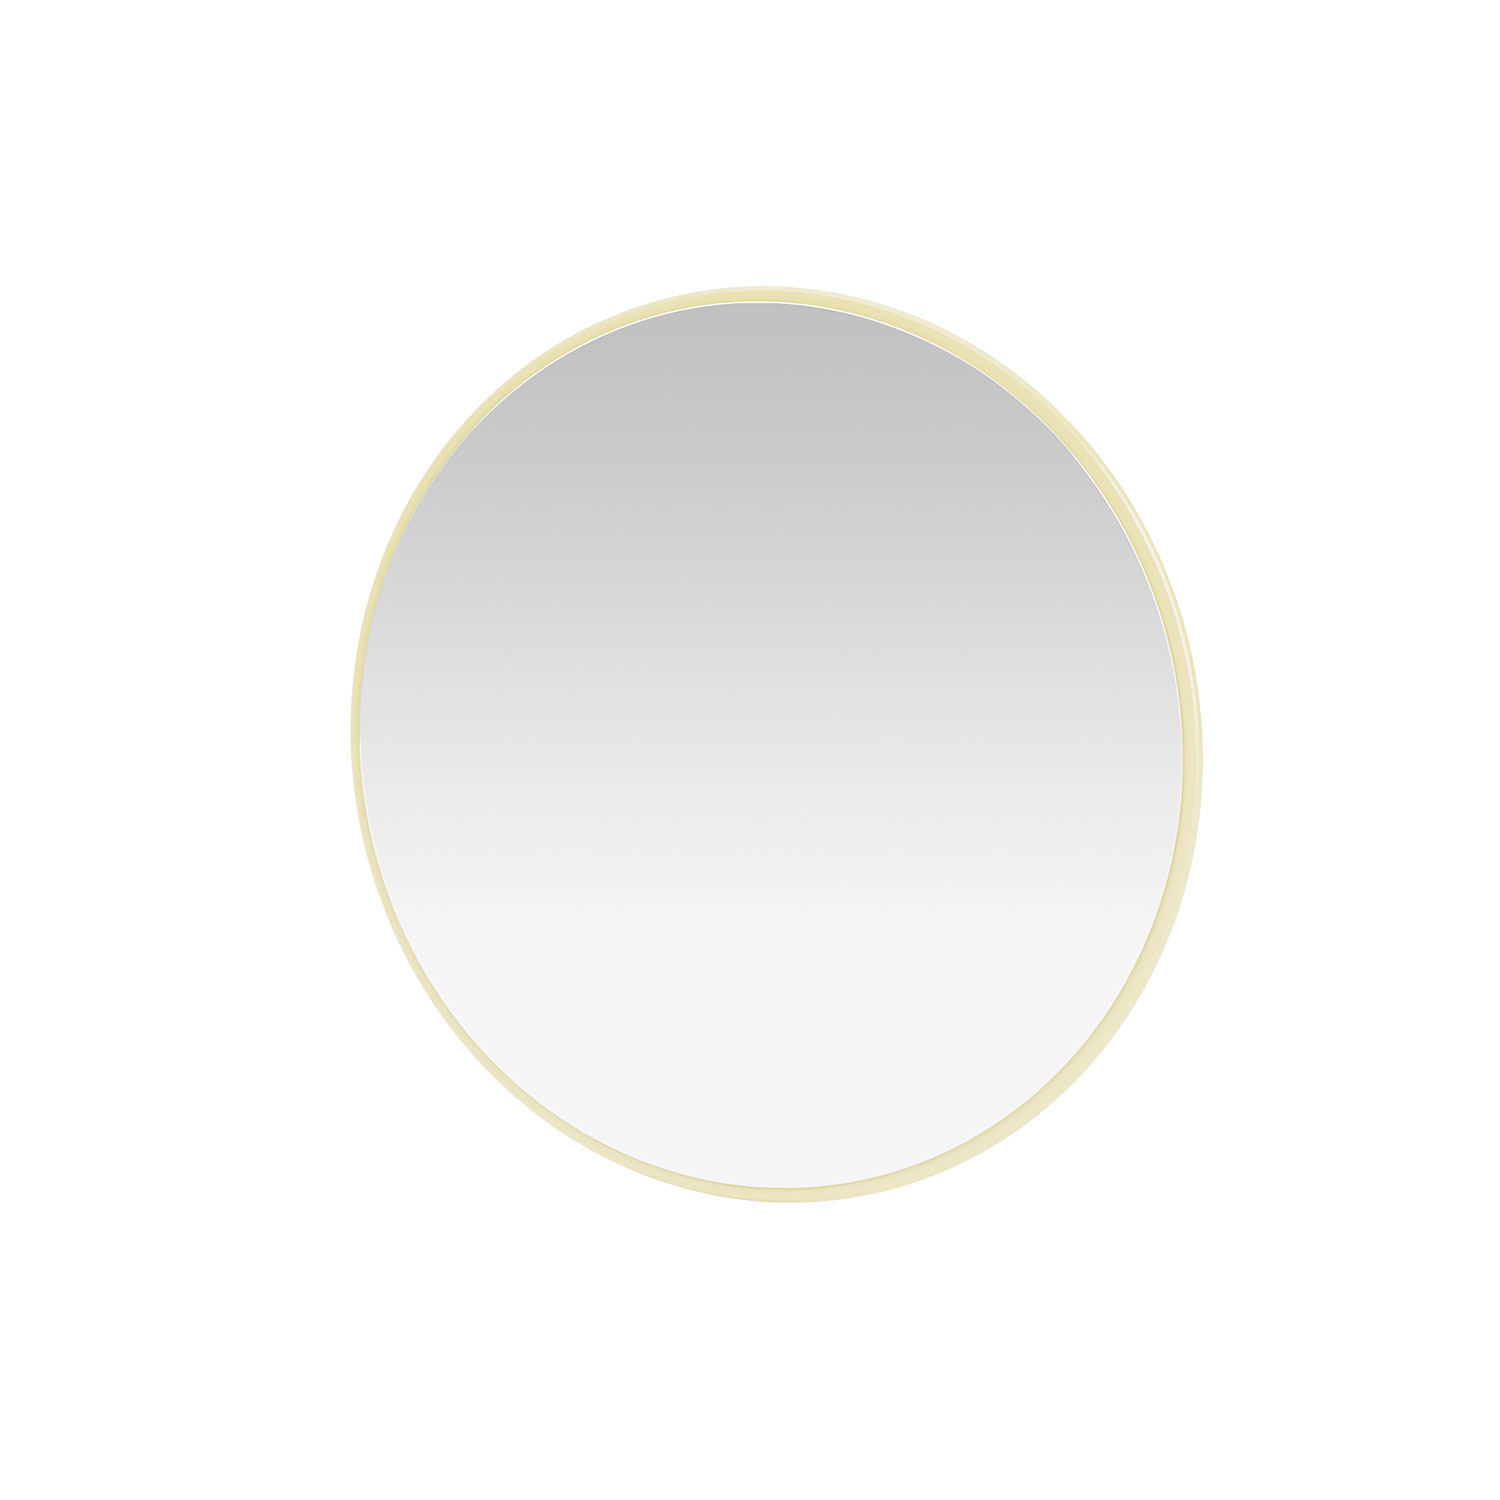 AROUND mirror, Camomile